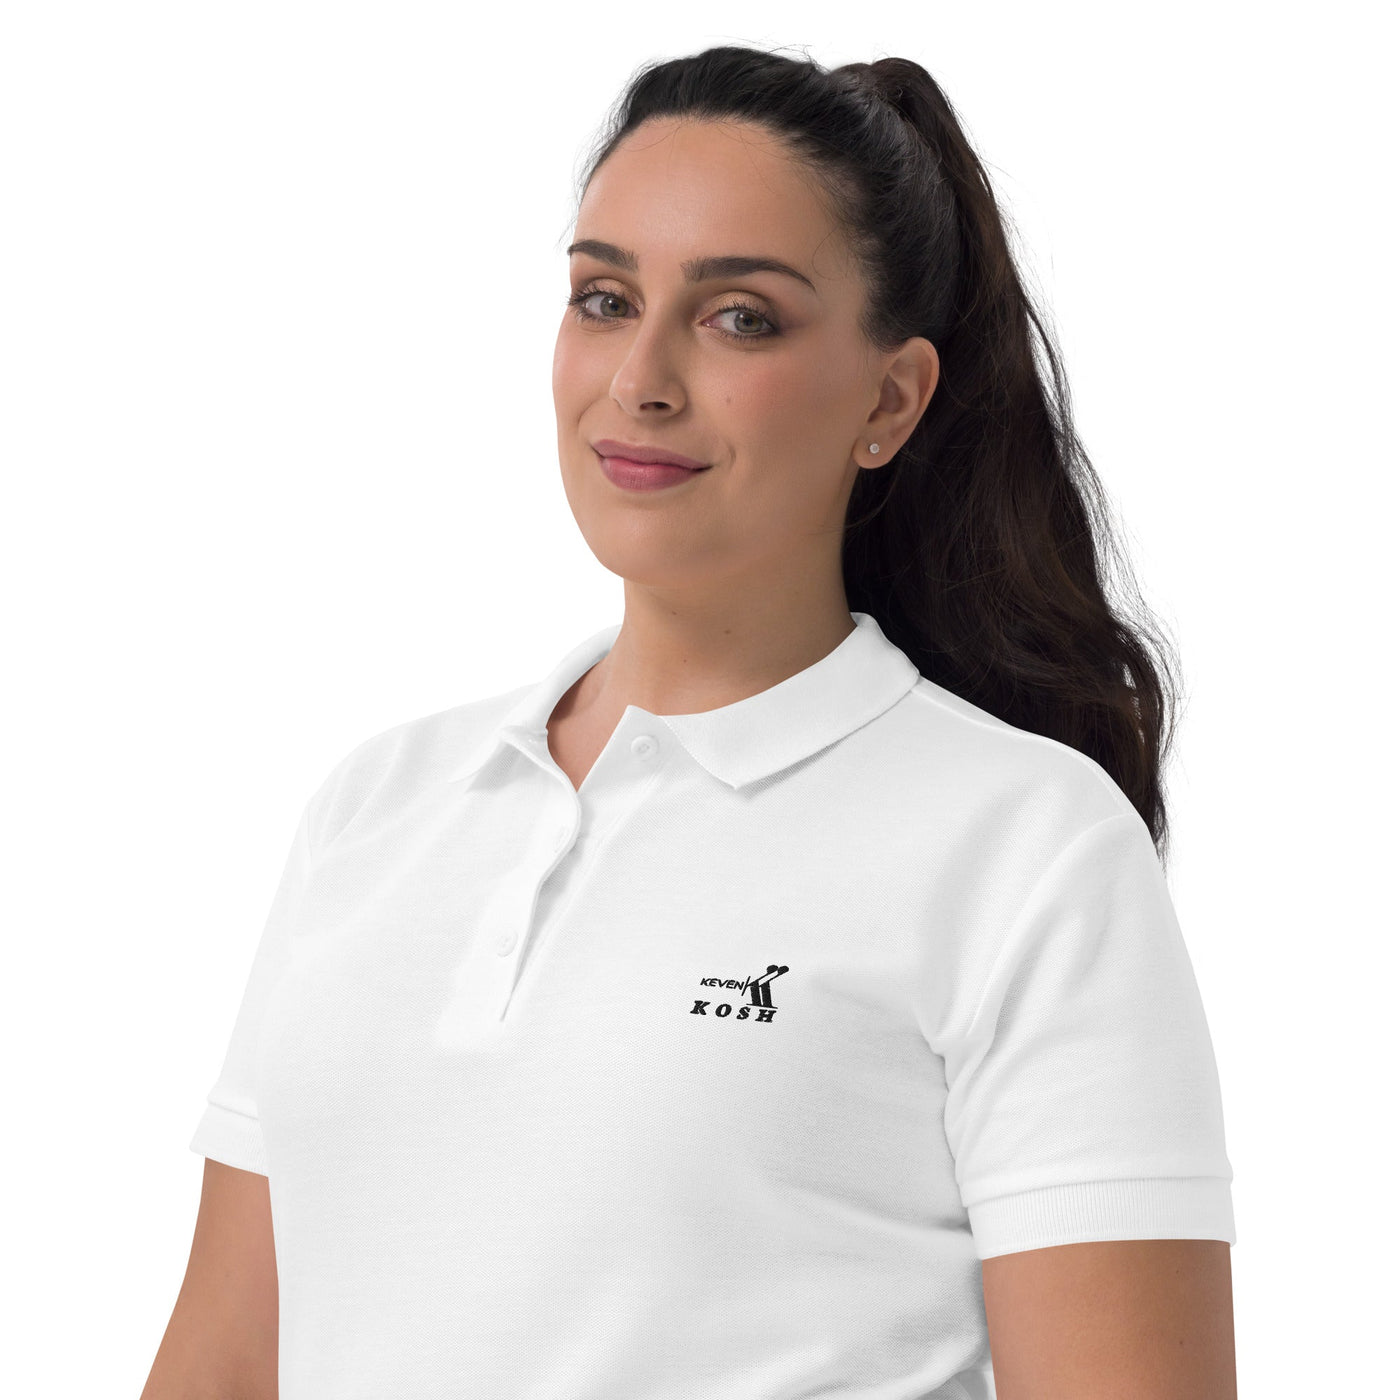 KevenKosh® Polo T-Shirt Women KevenKosh White M 